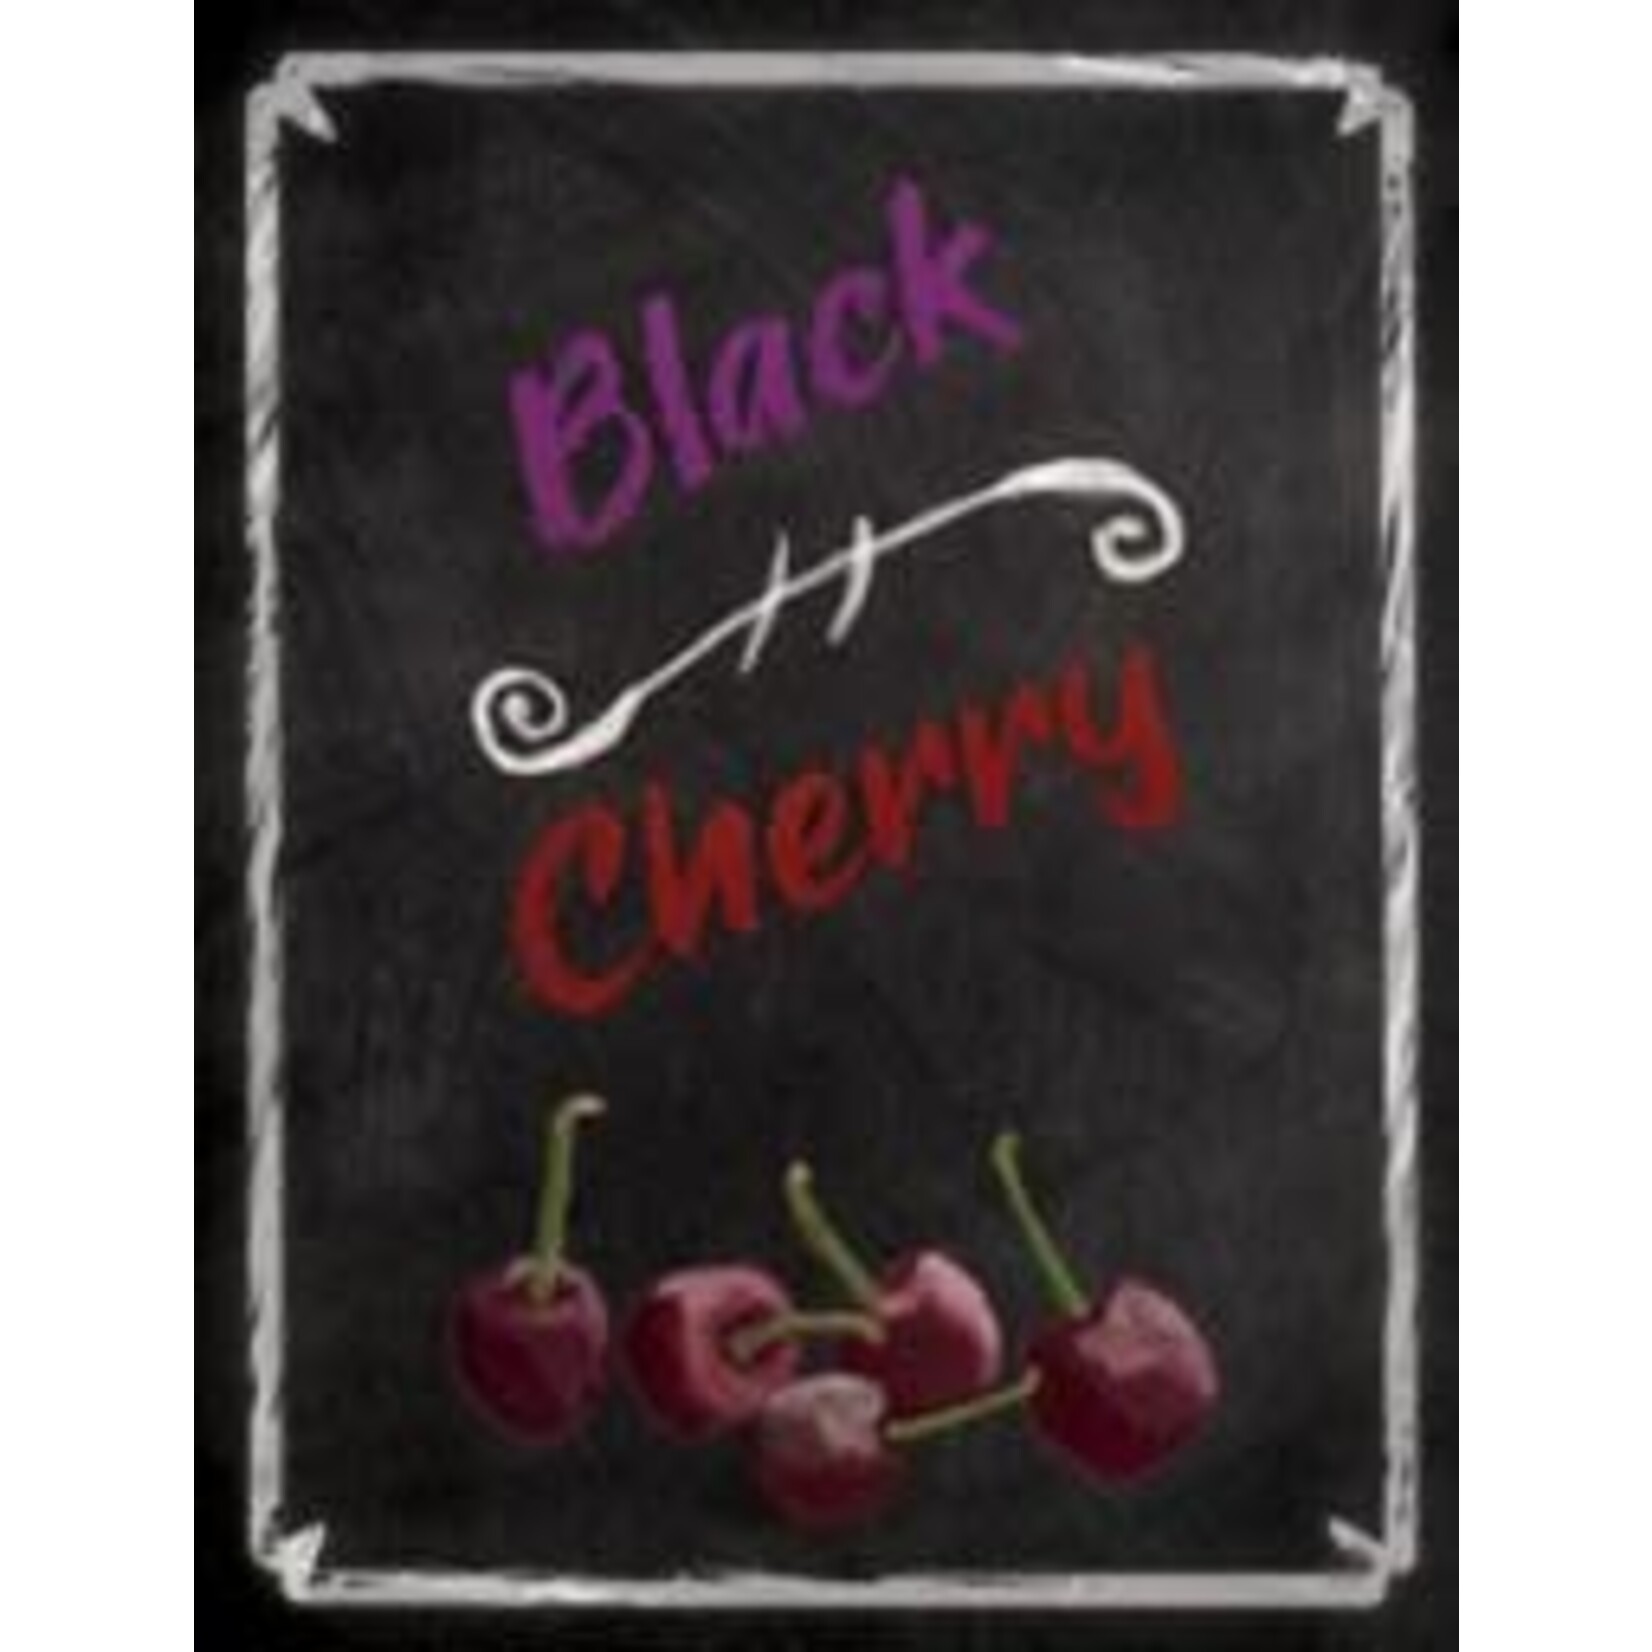 BLACK CHERRY WINE LABELS